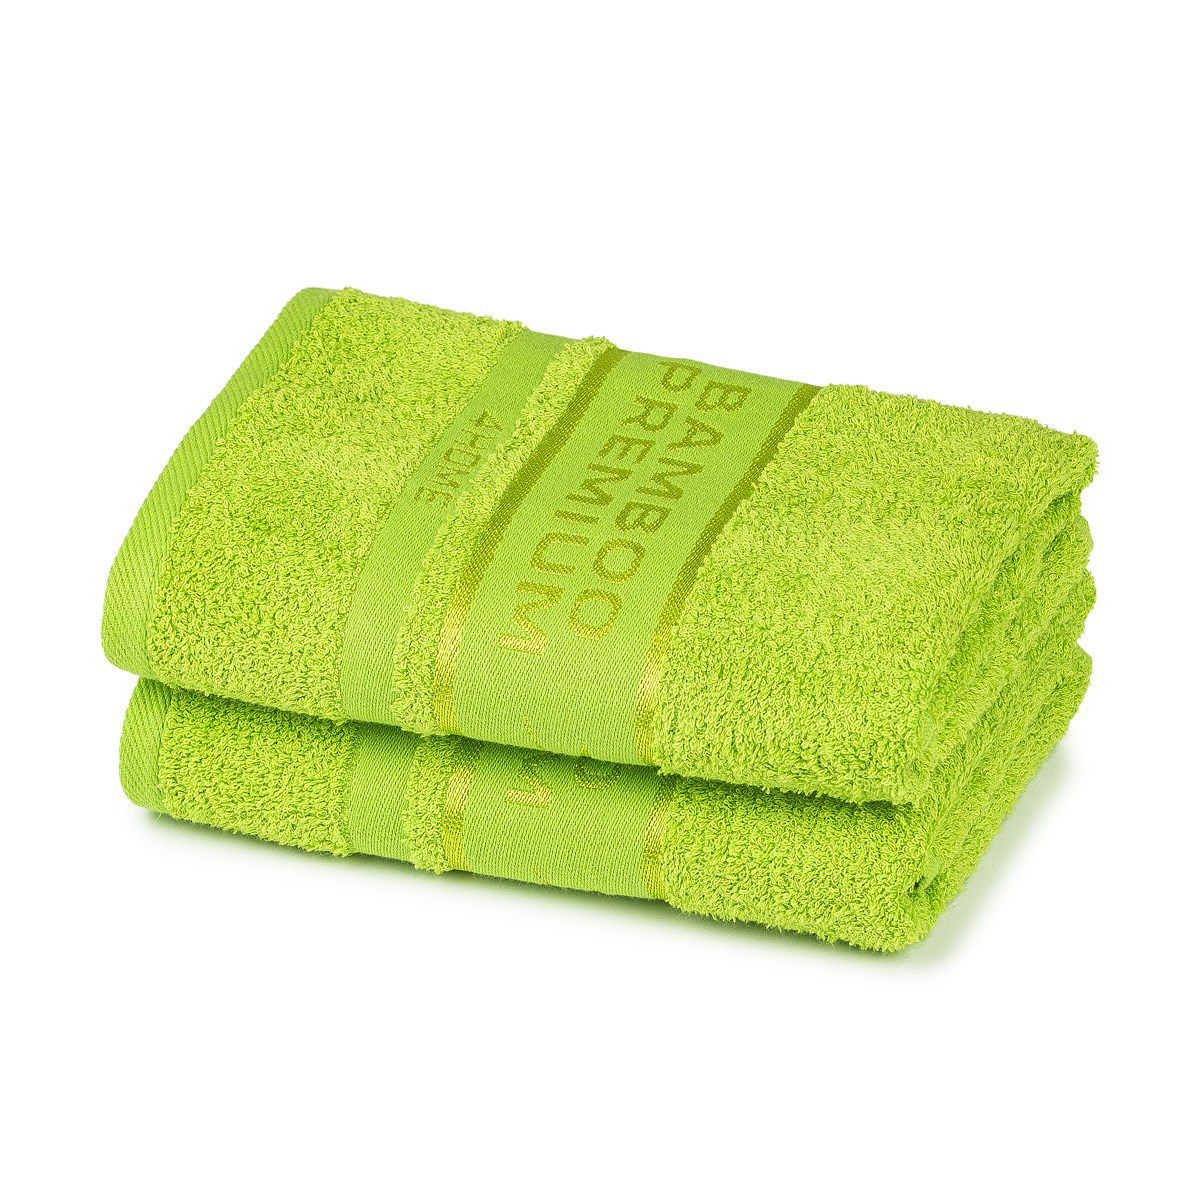 4Home Bamboo Premium ručník zelená, 50 x 100 cm, sada 2 ks - 4home.cz